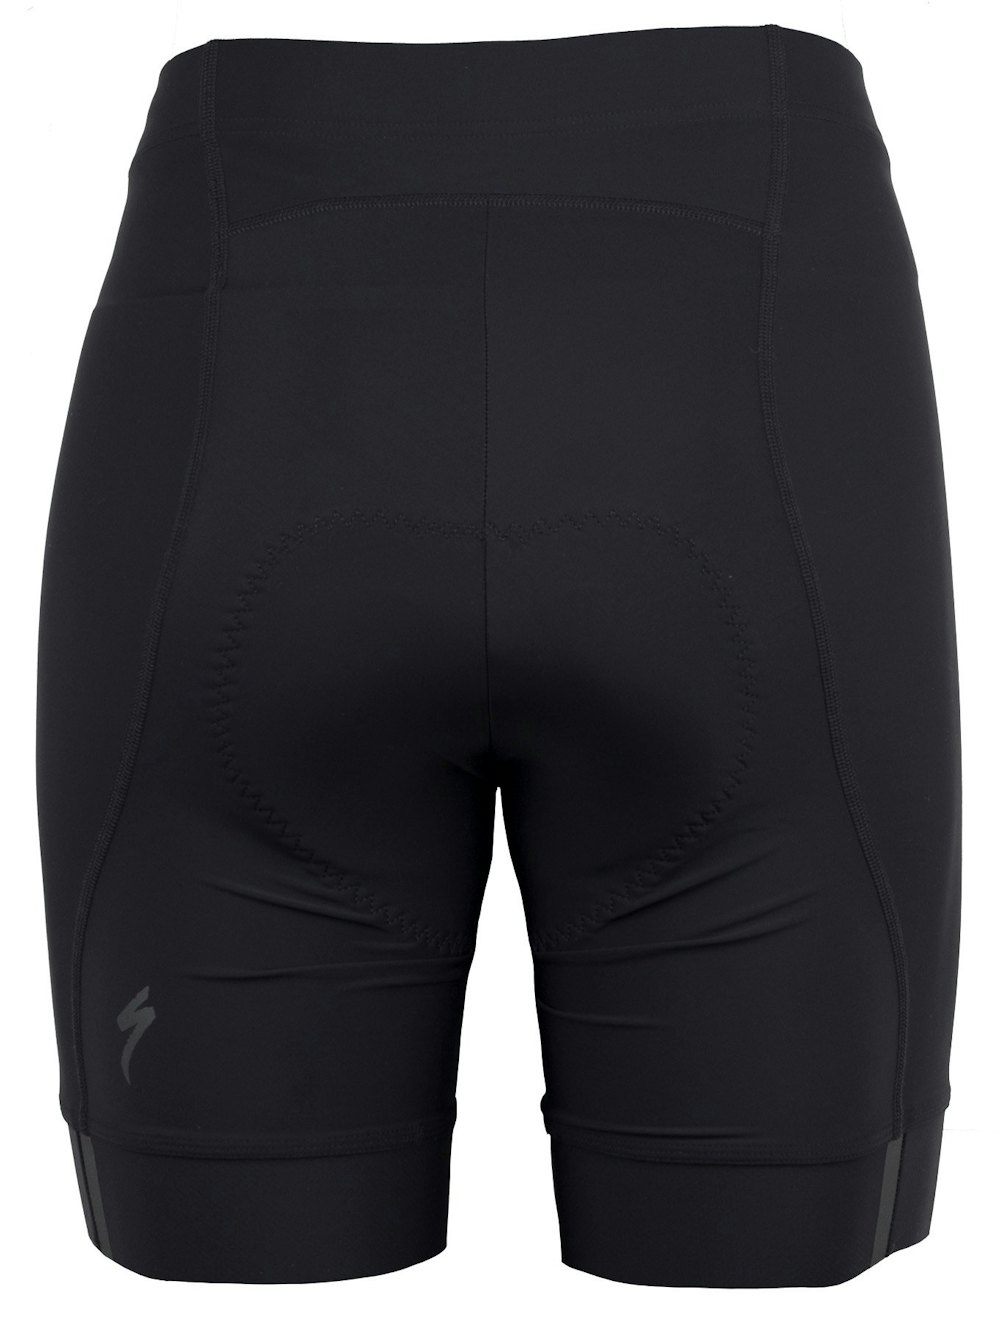 Specialized Women's RBX Shorts